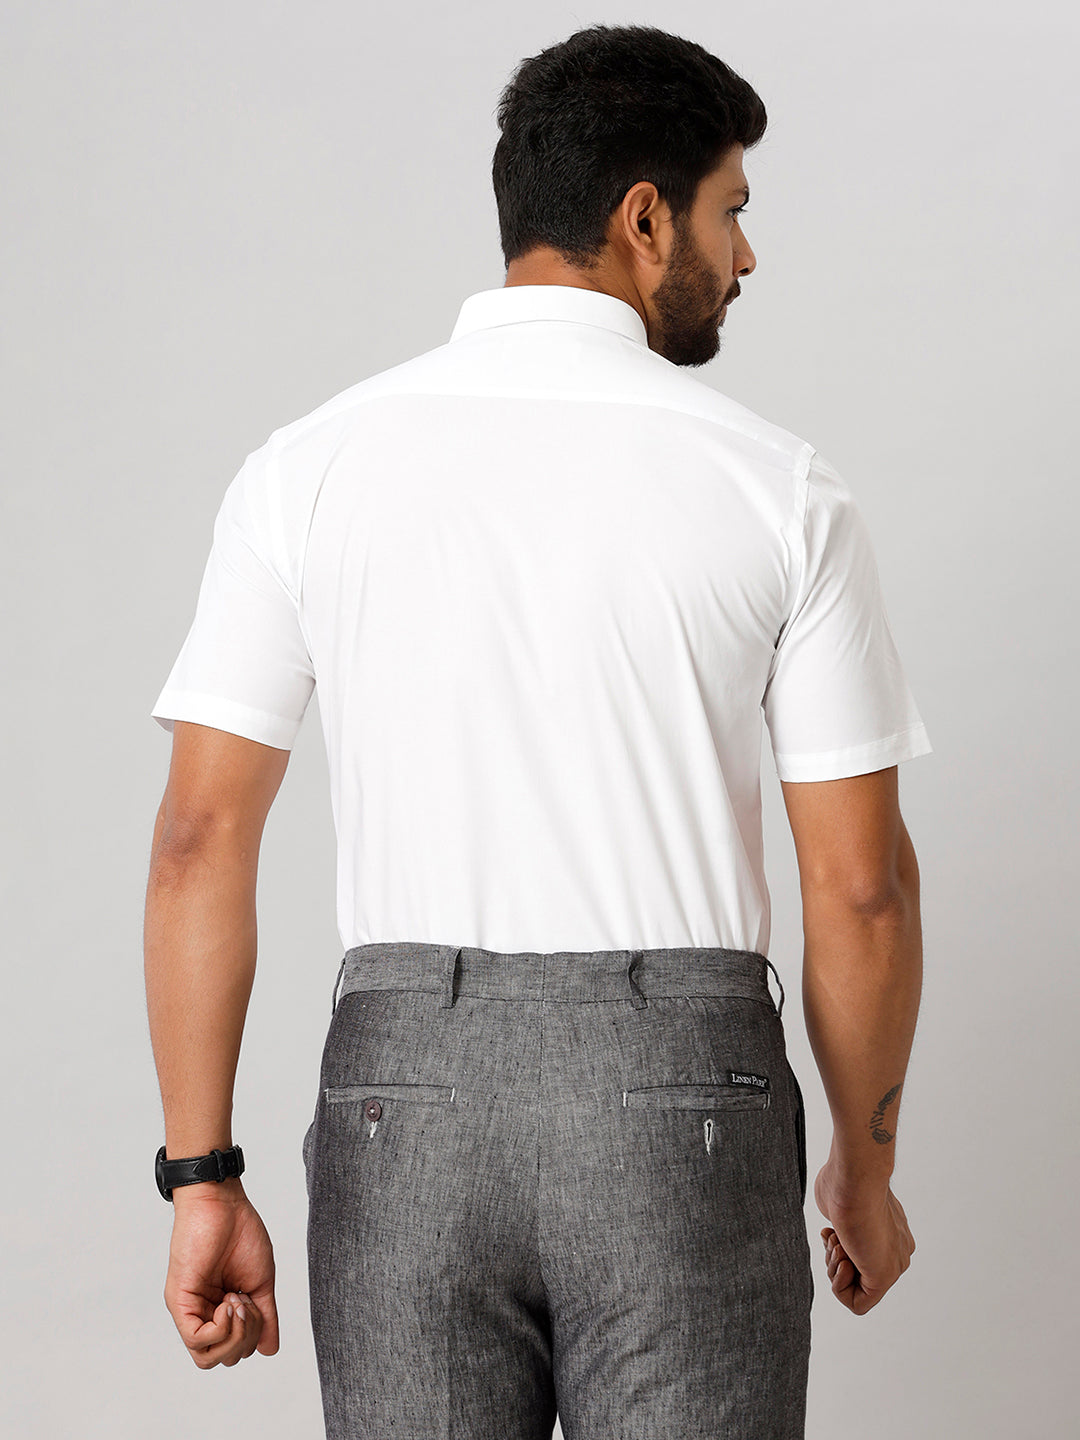 Mens Uniform Cotton White Shirt Half Sleeves-Back view